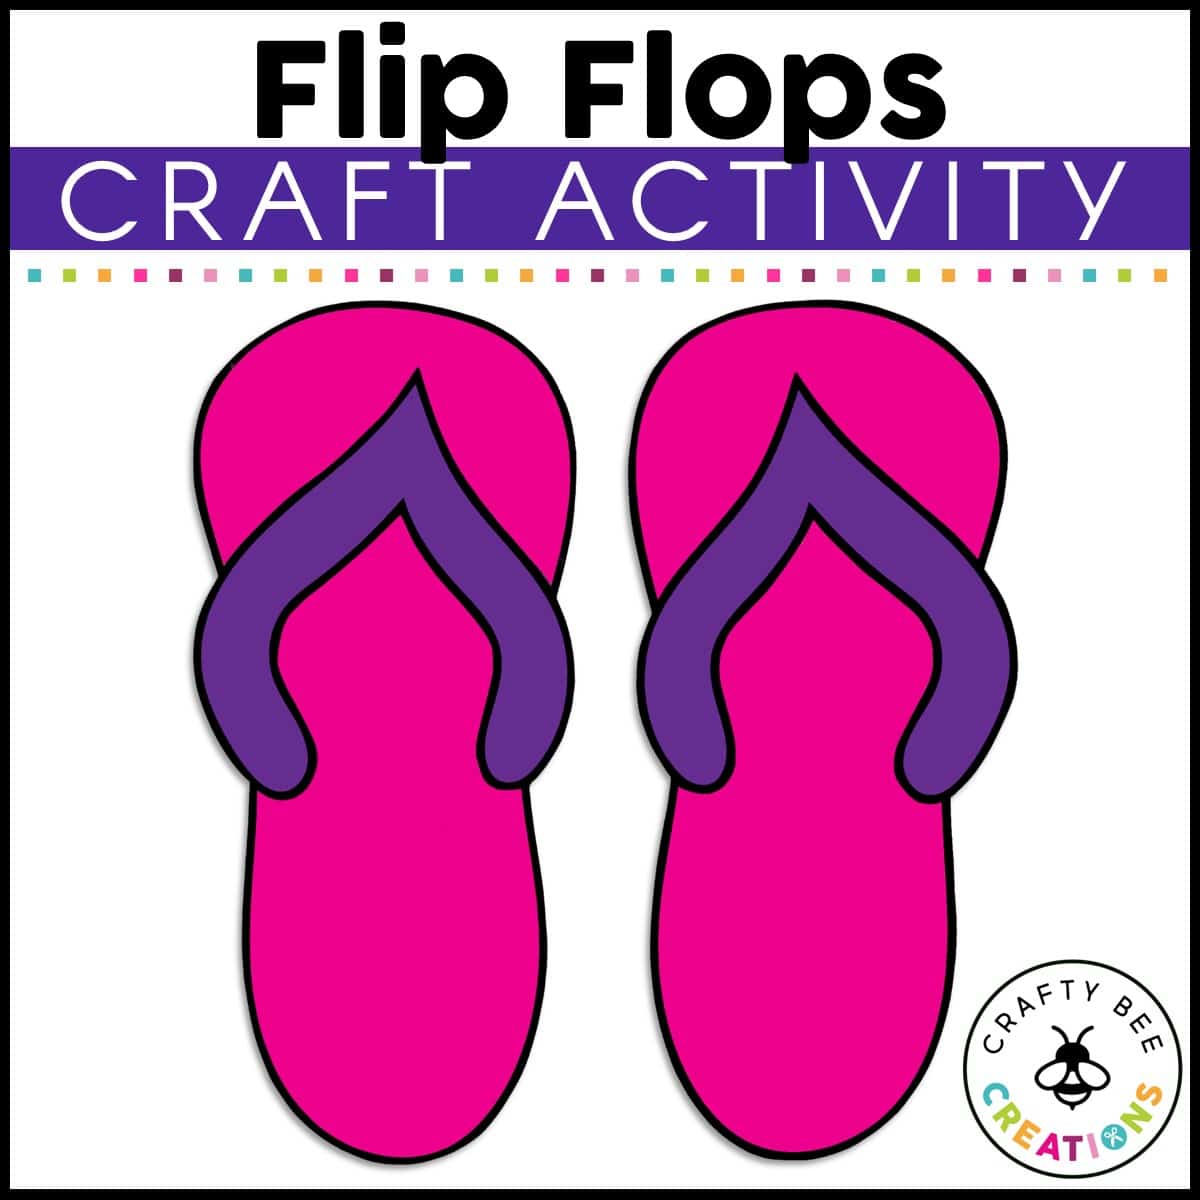 Flip Flops Craft Activity - Crafty Bee Creations